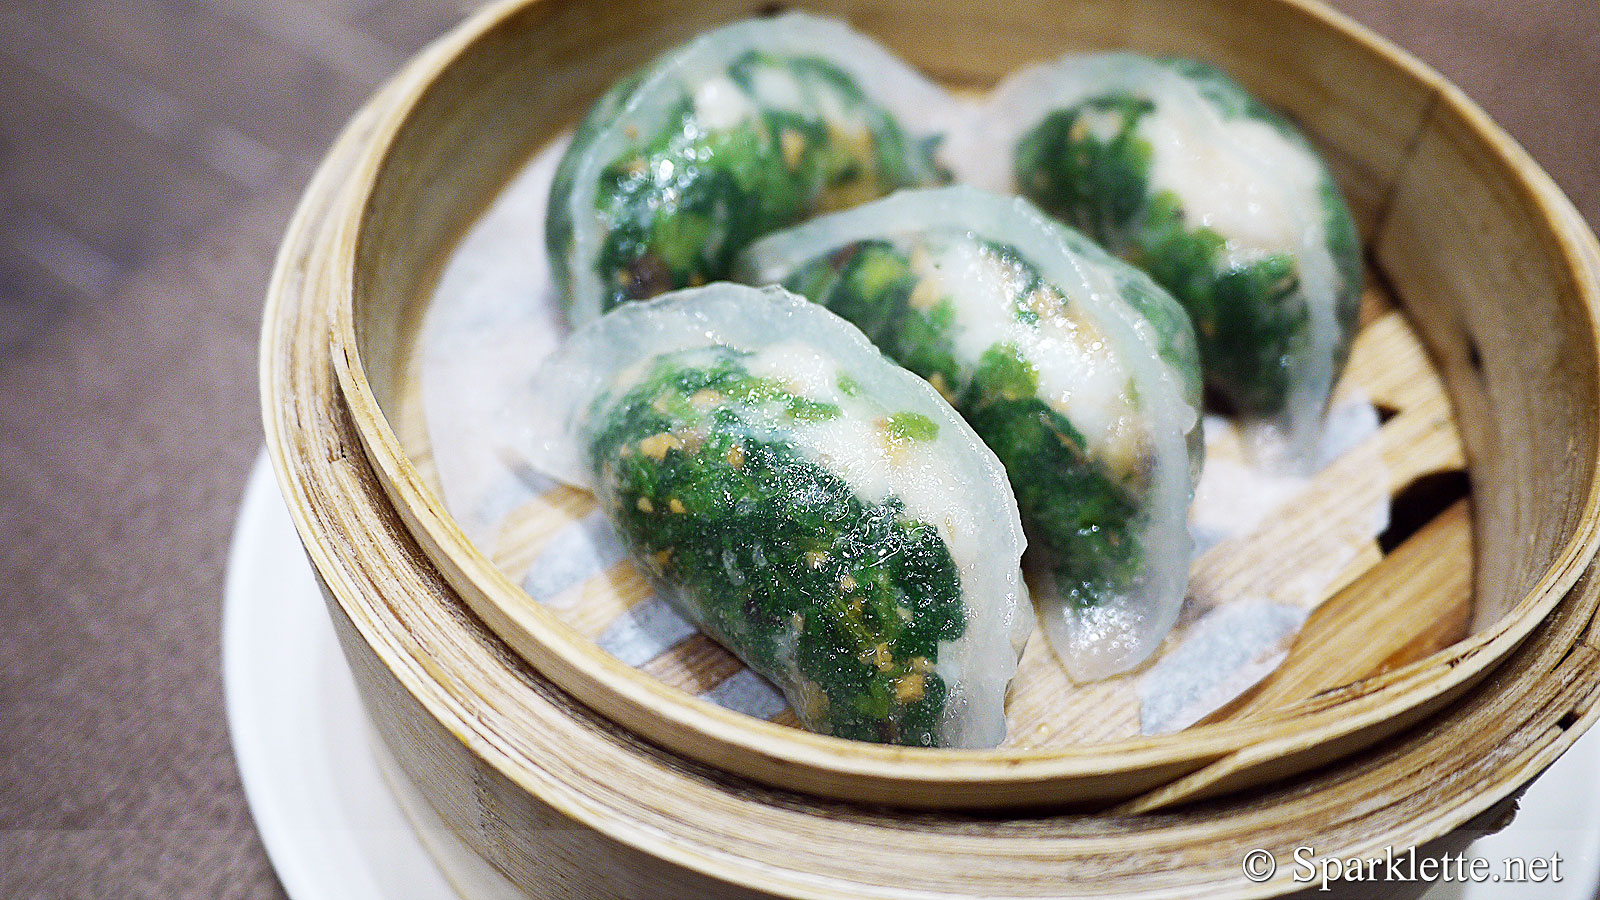 Steamed spinach dumpling with shrimp